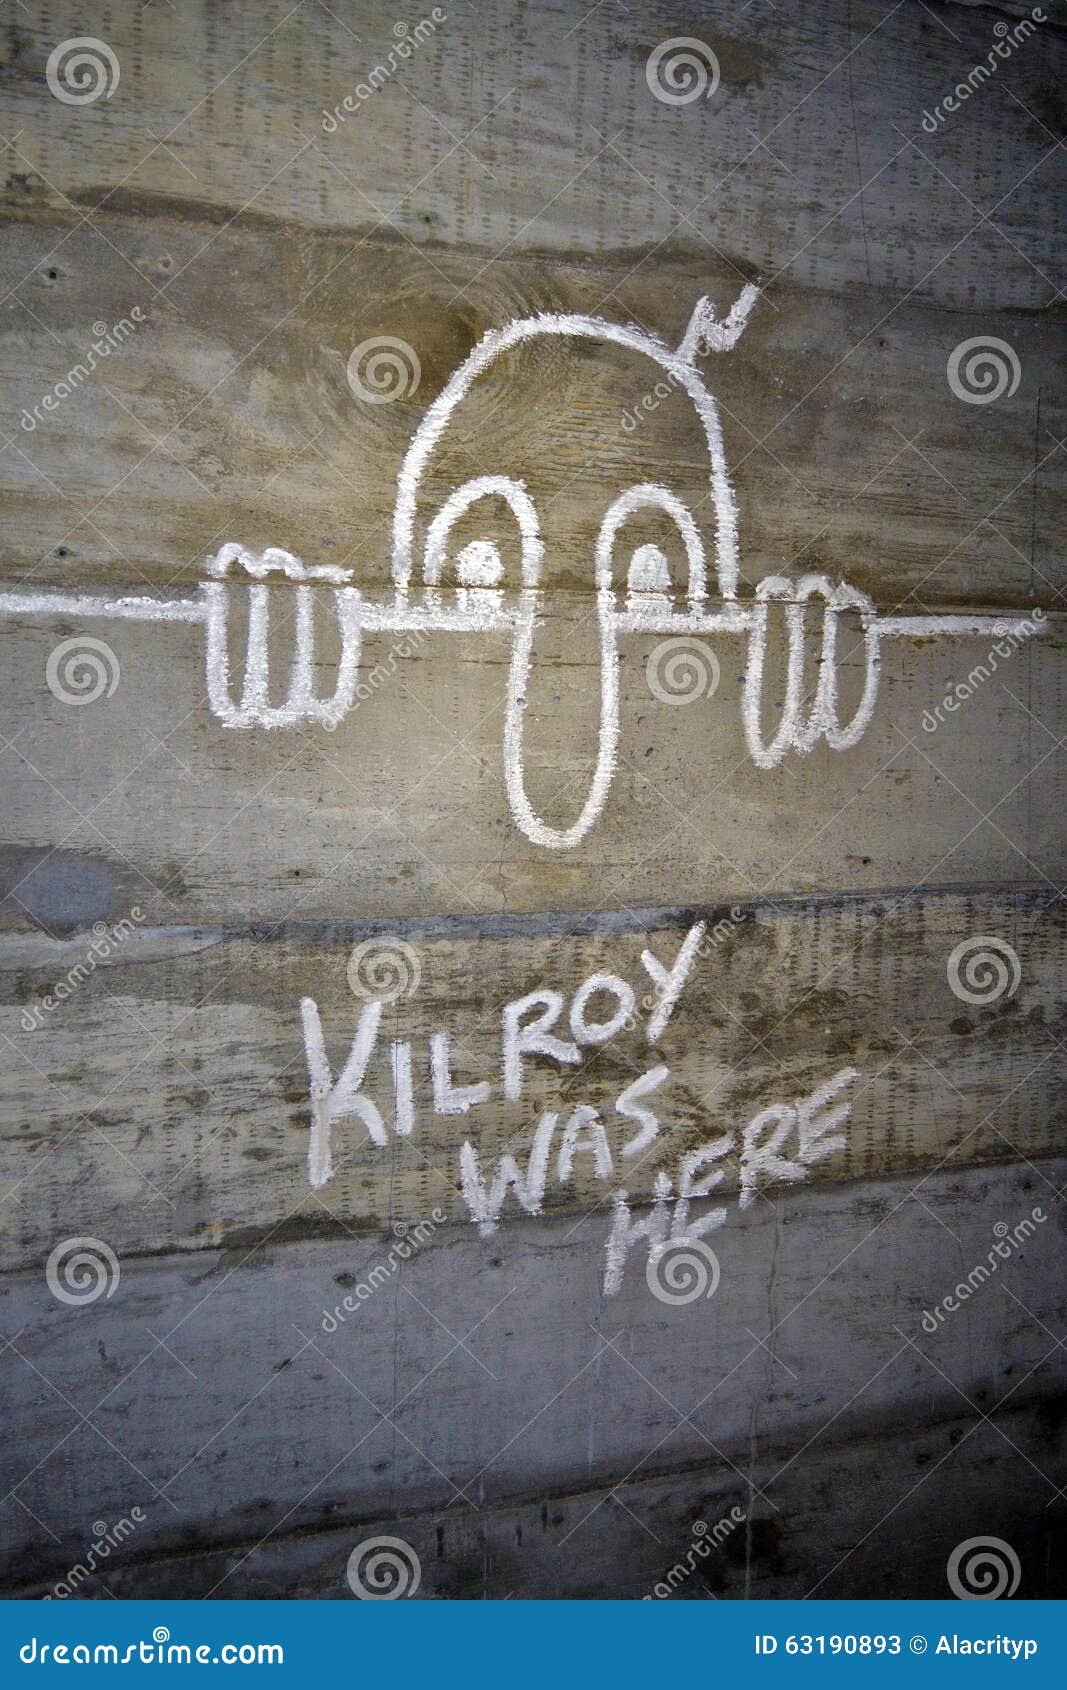 iconic world war ii grafitti